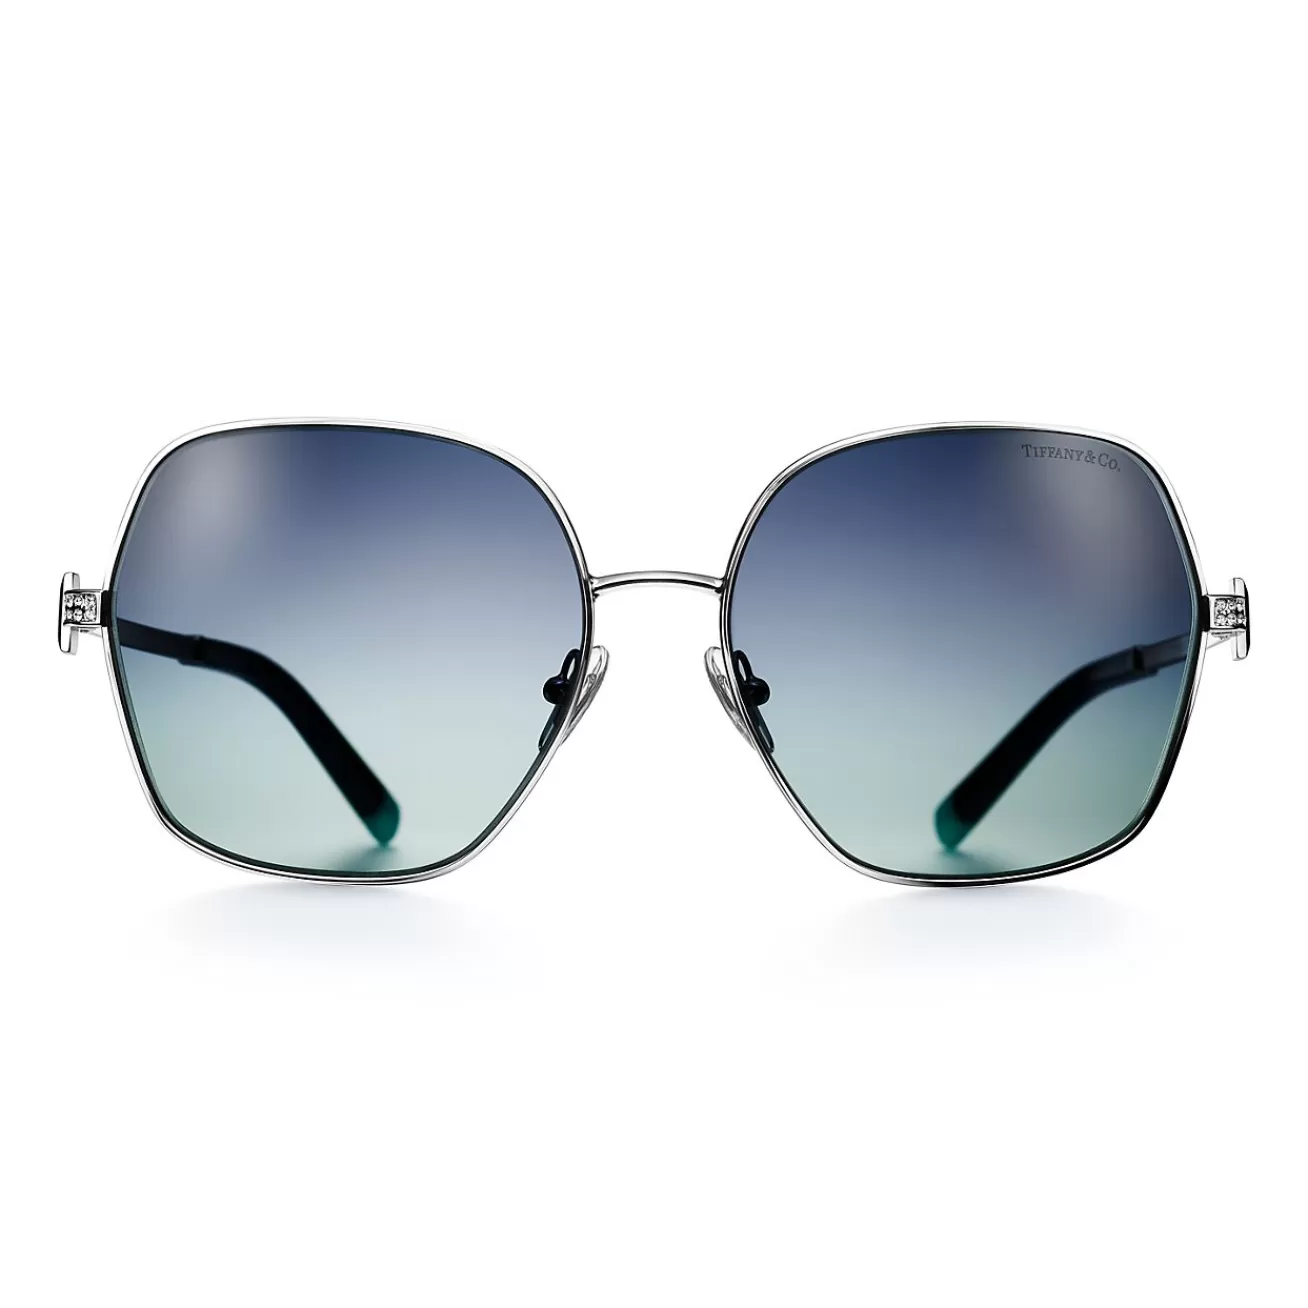 Tiffany & Co. Tiffany T Sunglasses in Silver-colored Metal with Gradient Tiffany Blue® Lenses | ^ Tiffany T | Sunglasses